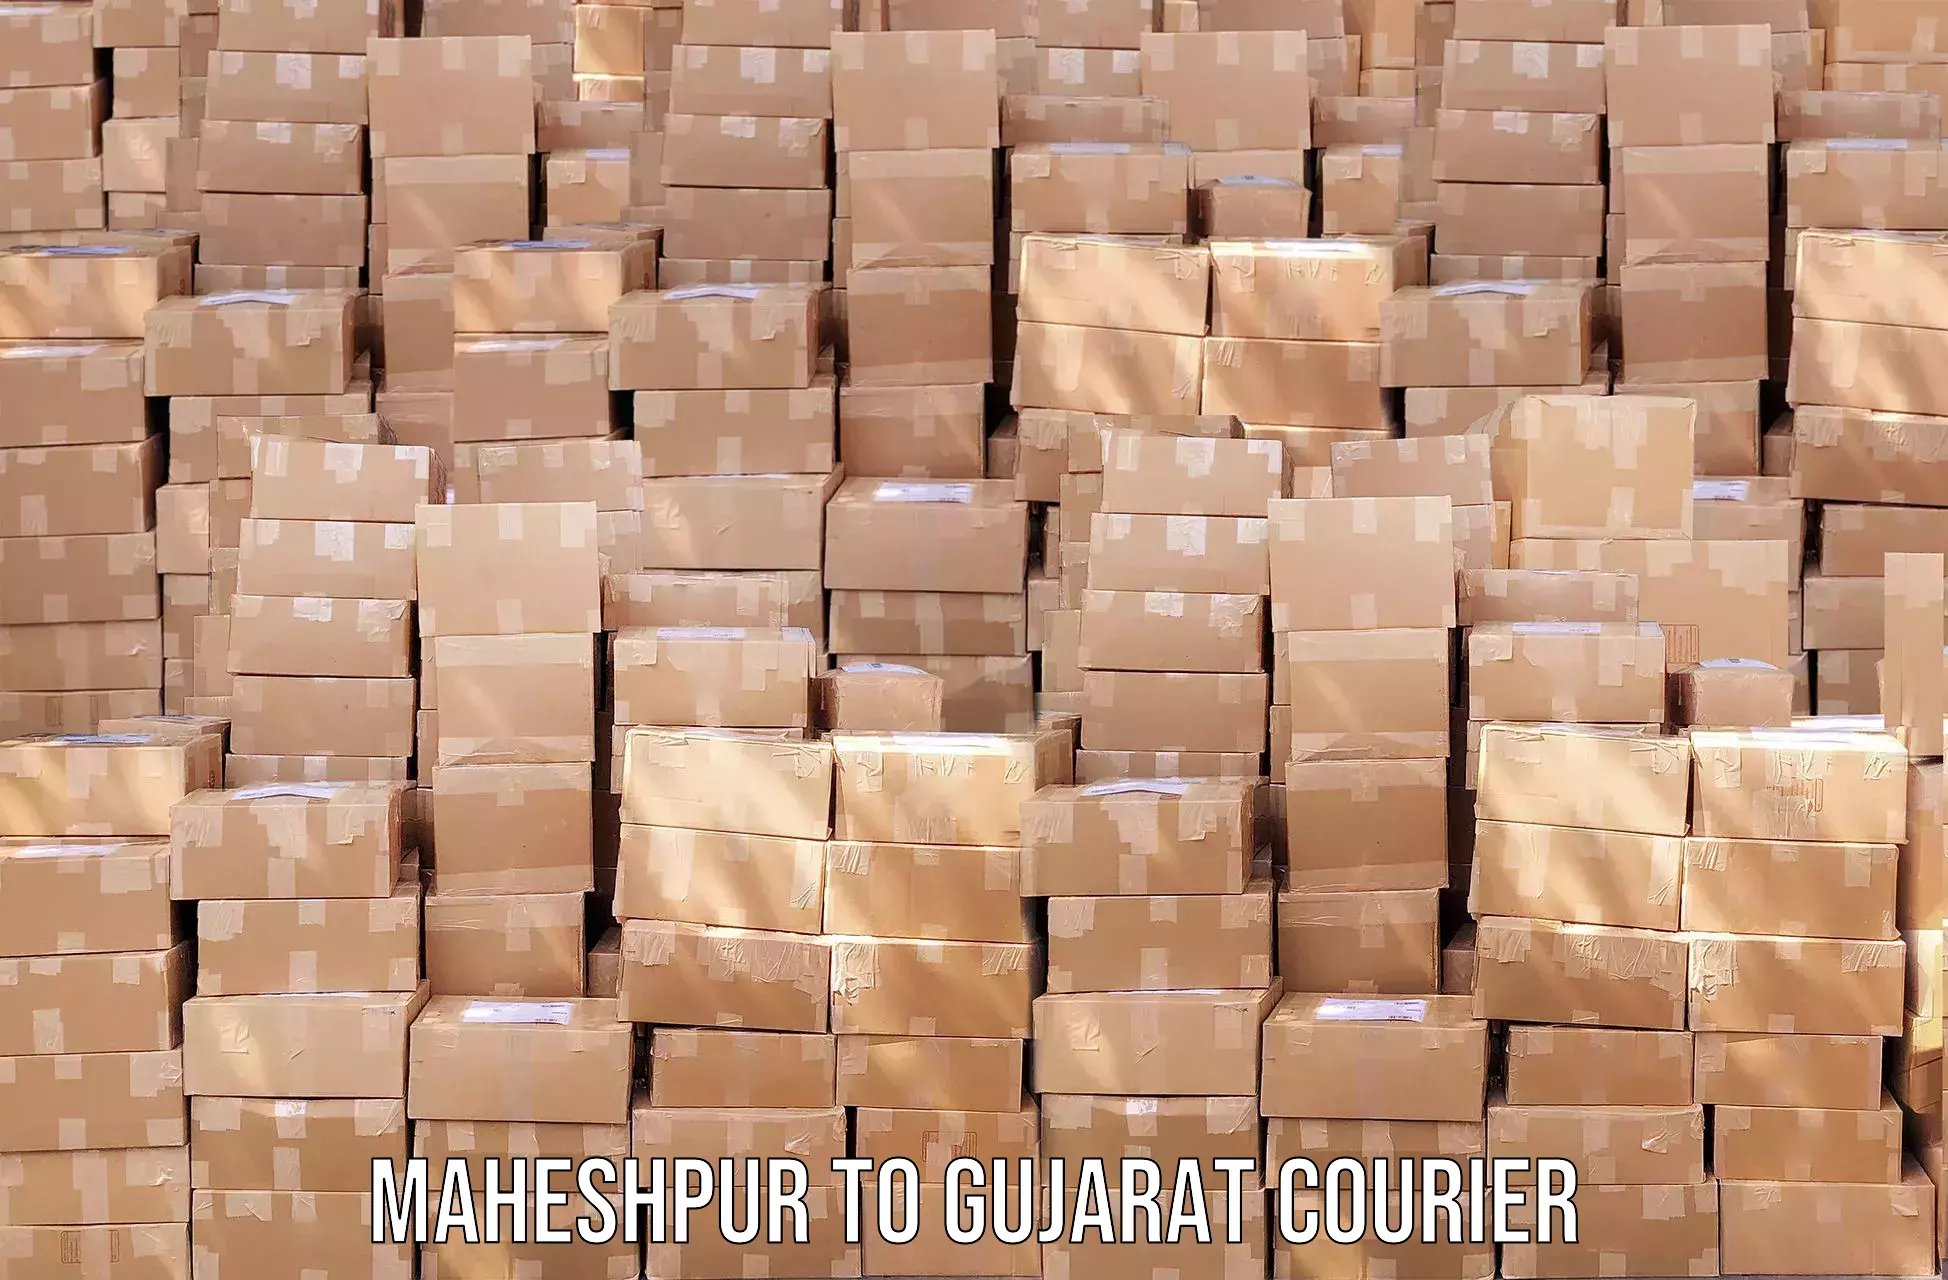 Digital courier platforms Maheshpur to Becharaji